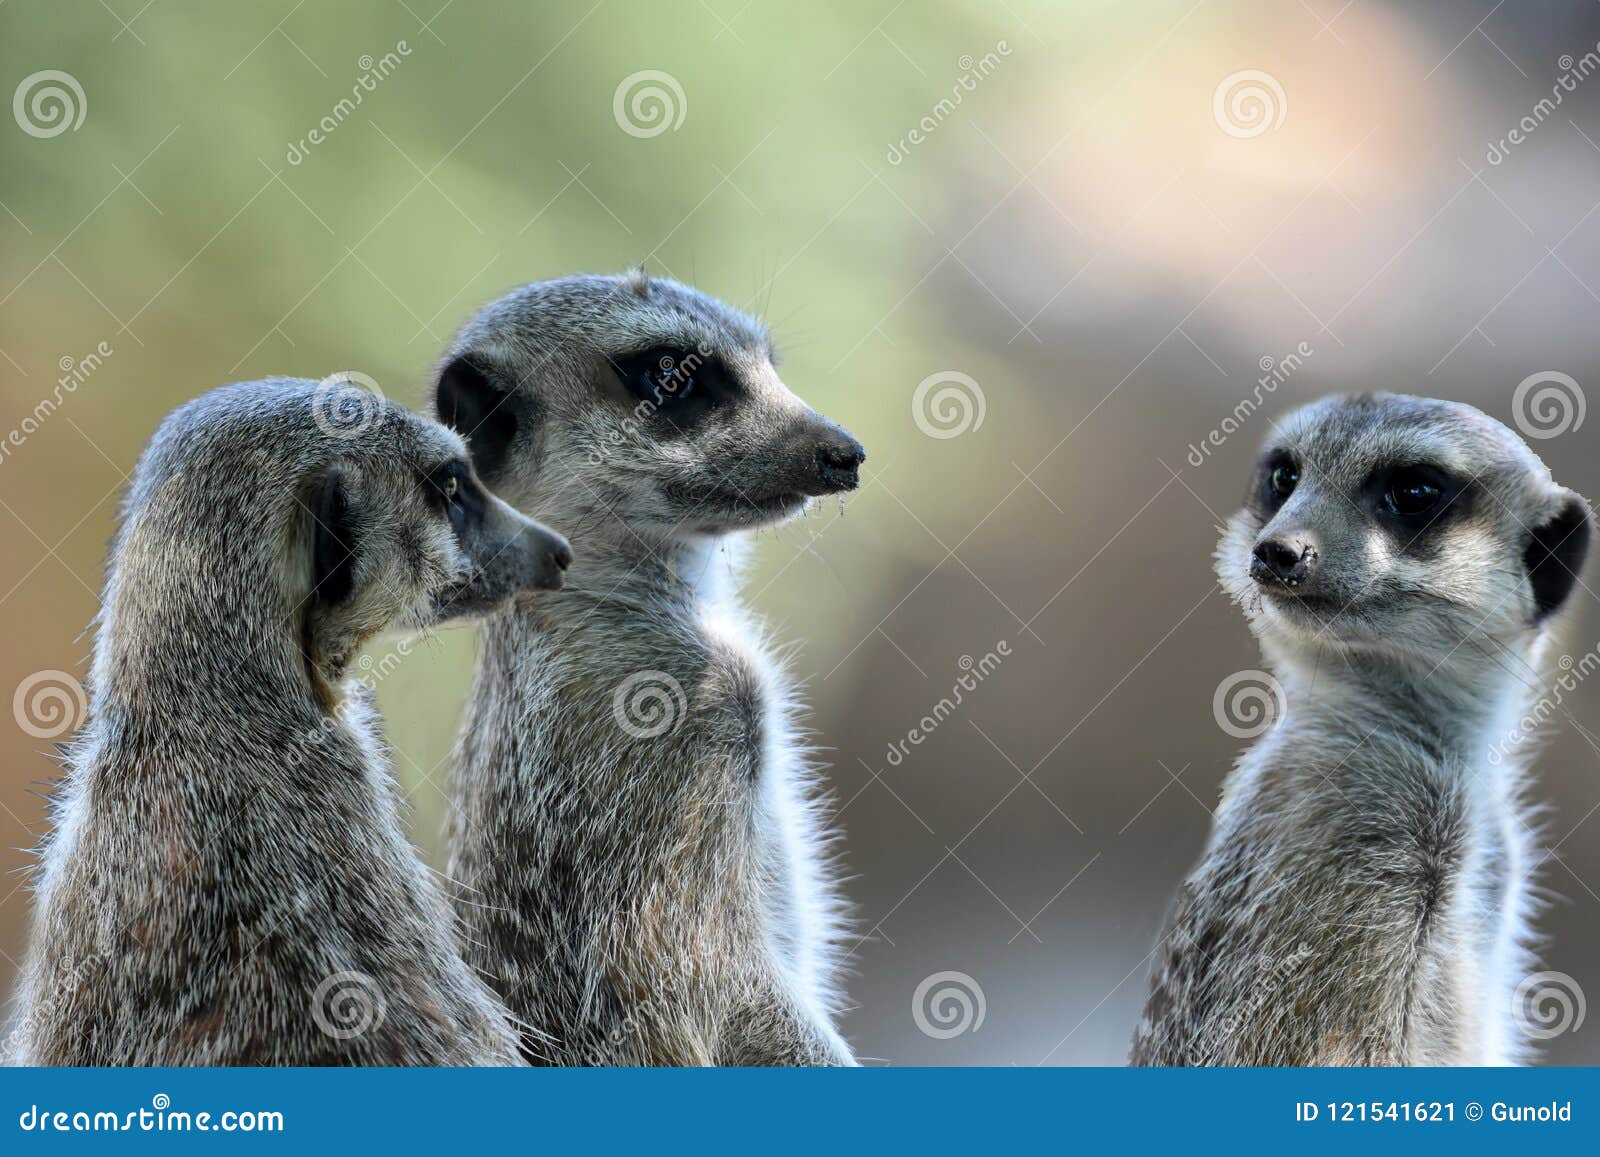 meerkats or suricates observing the surrounding